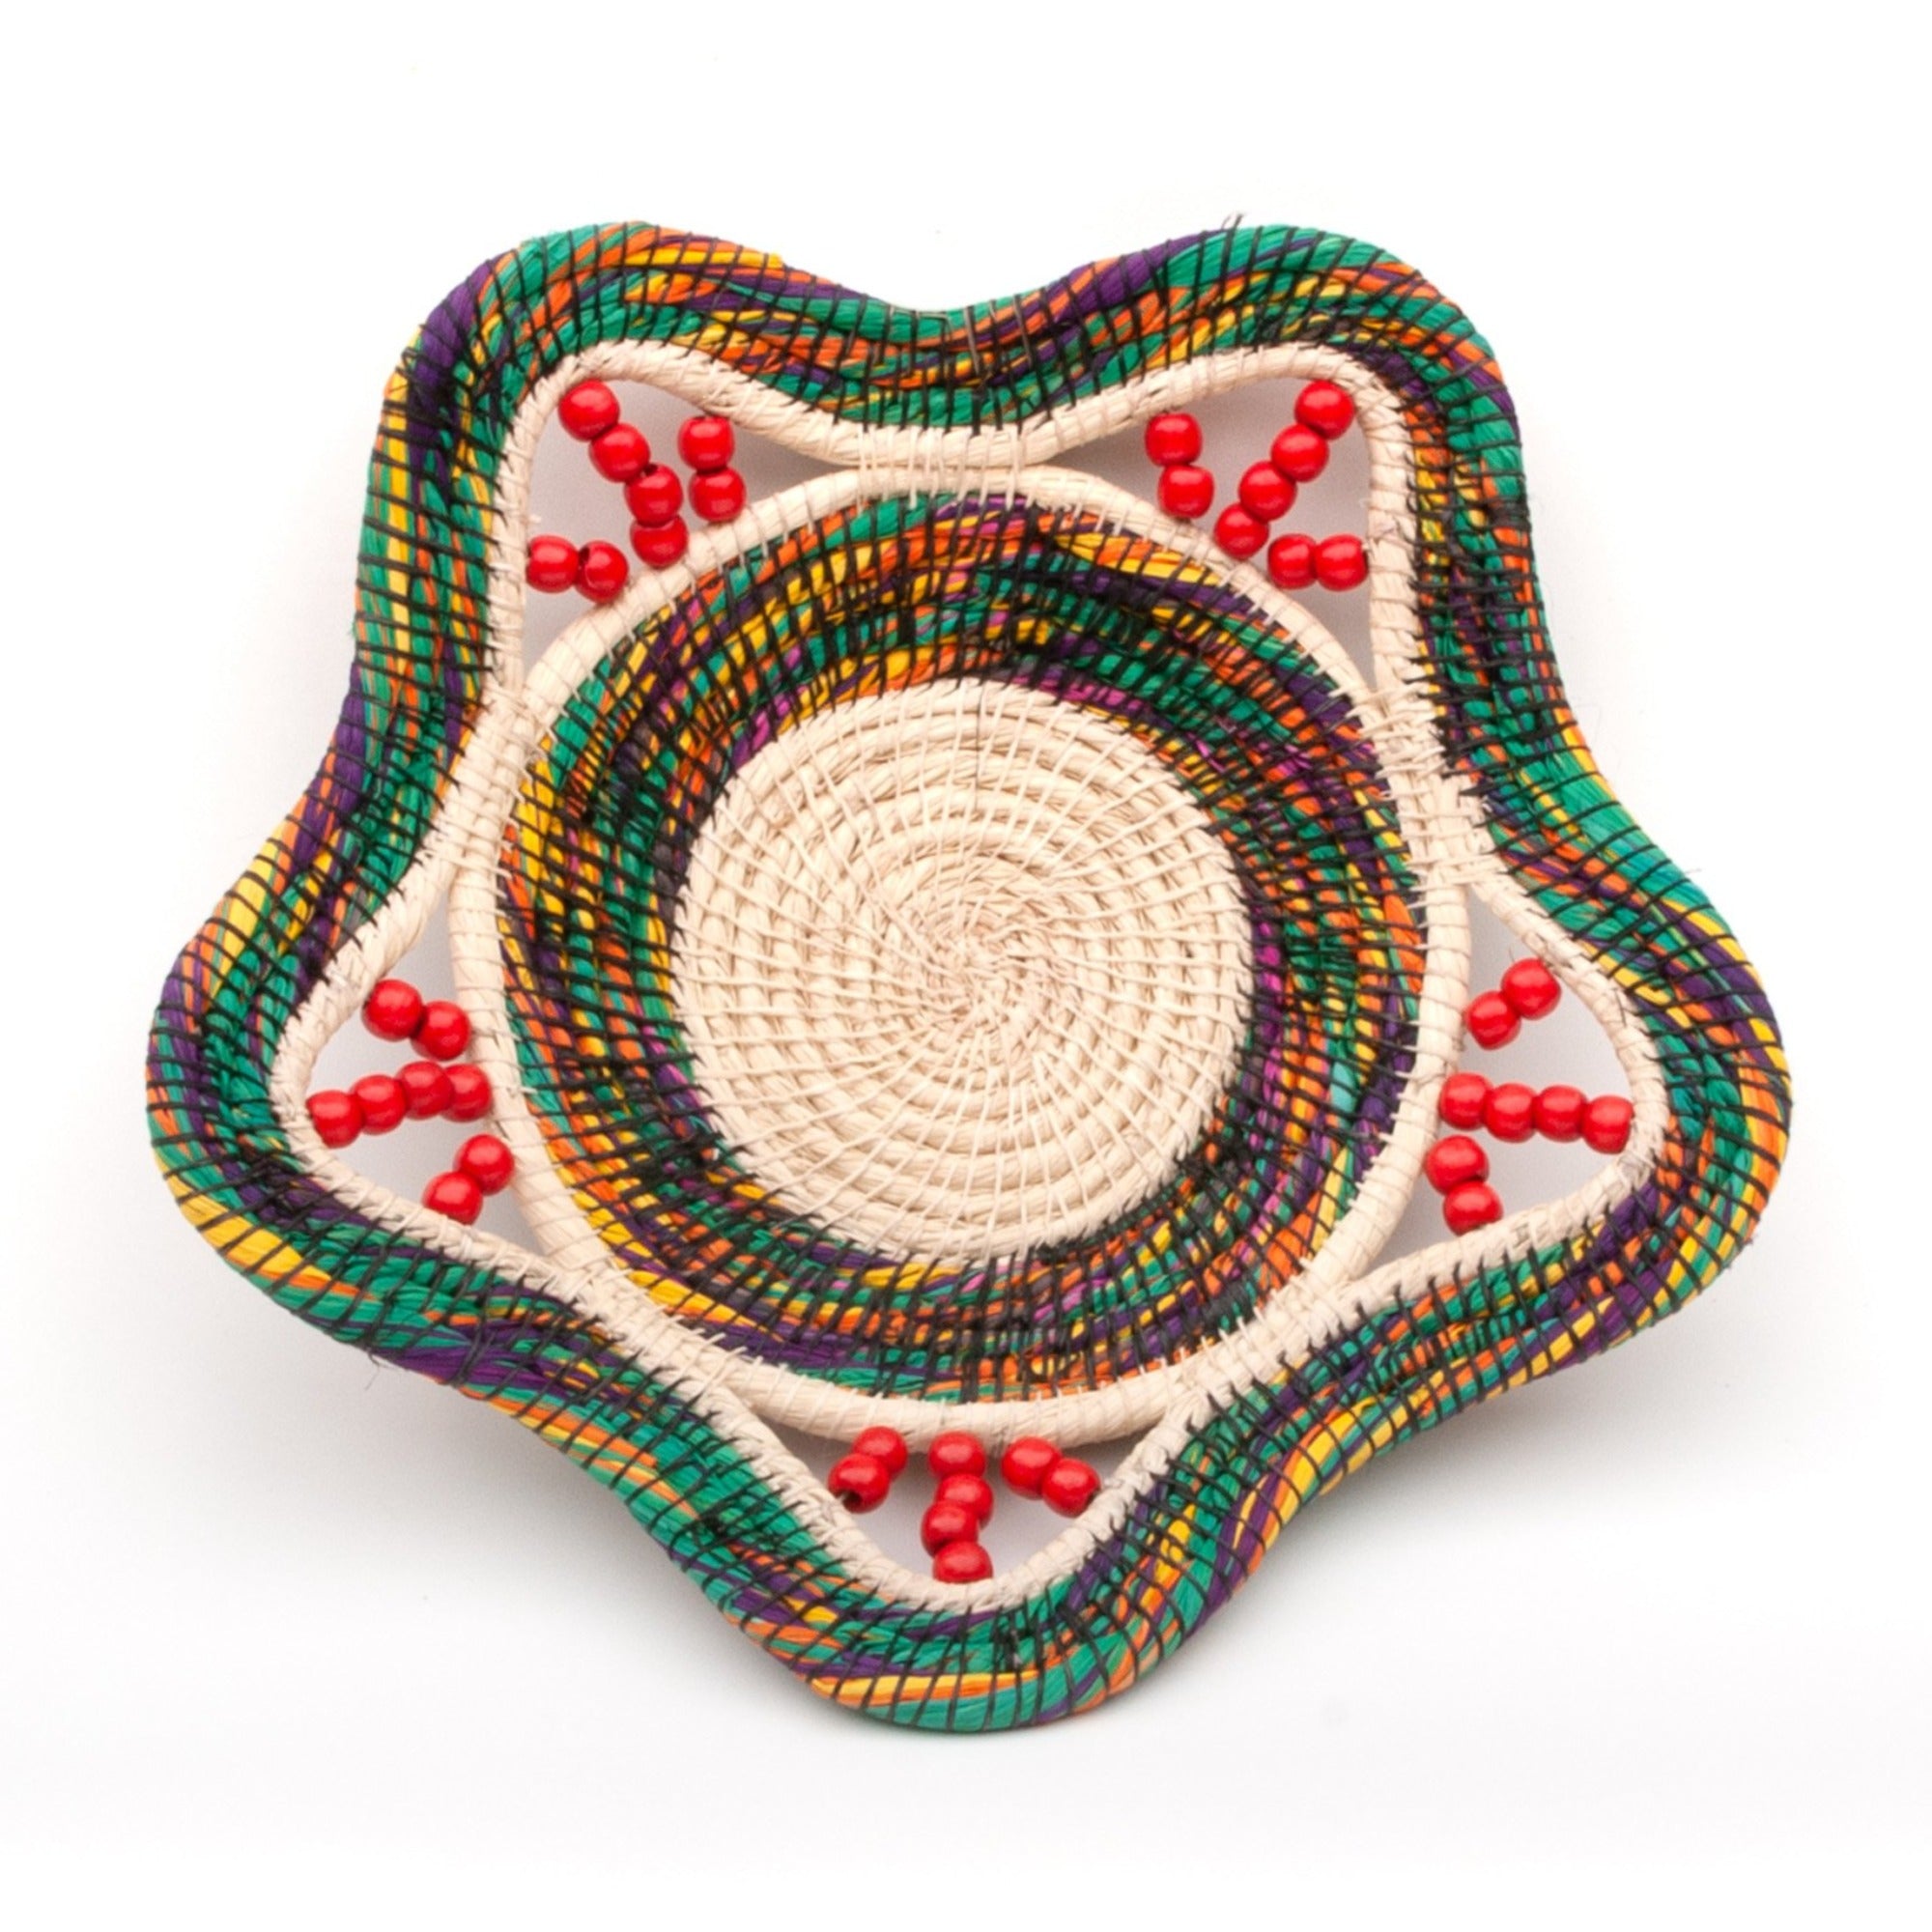 Vibrant Forest - Chambira Palm Fiber Basket - Fair Trade Handmade by Peruvian Amazon Artisan